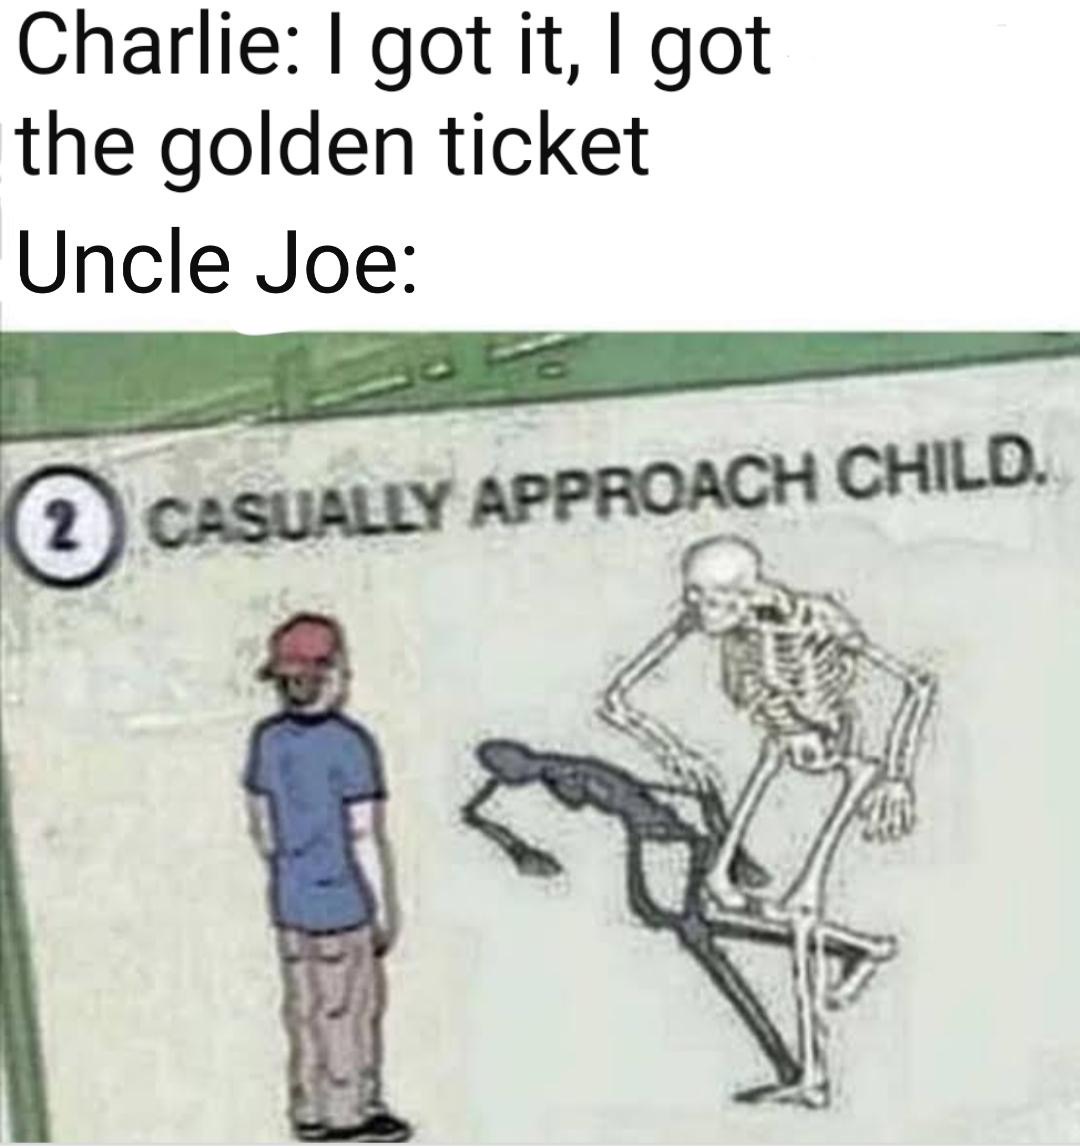 dank memes - casually approach meme - Charlie I got it, I got the golden ticket Uncle Joe Casually Approach Child.